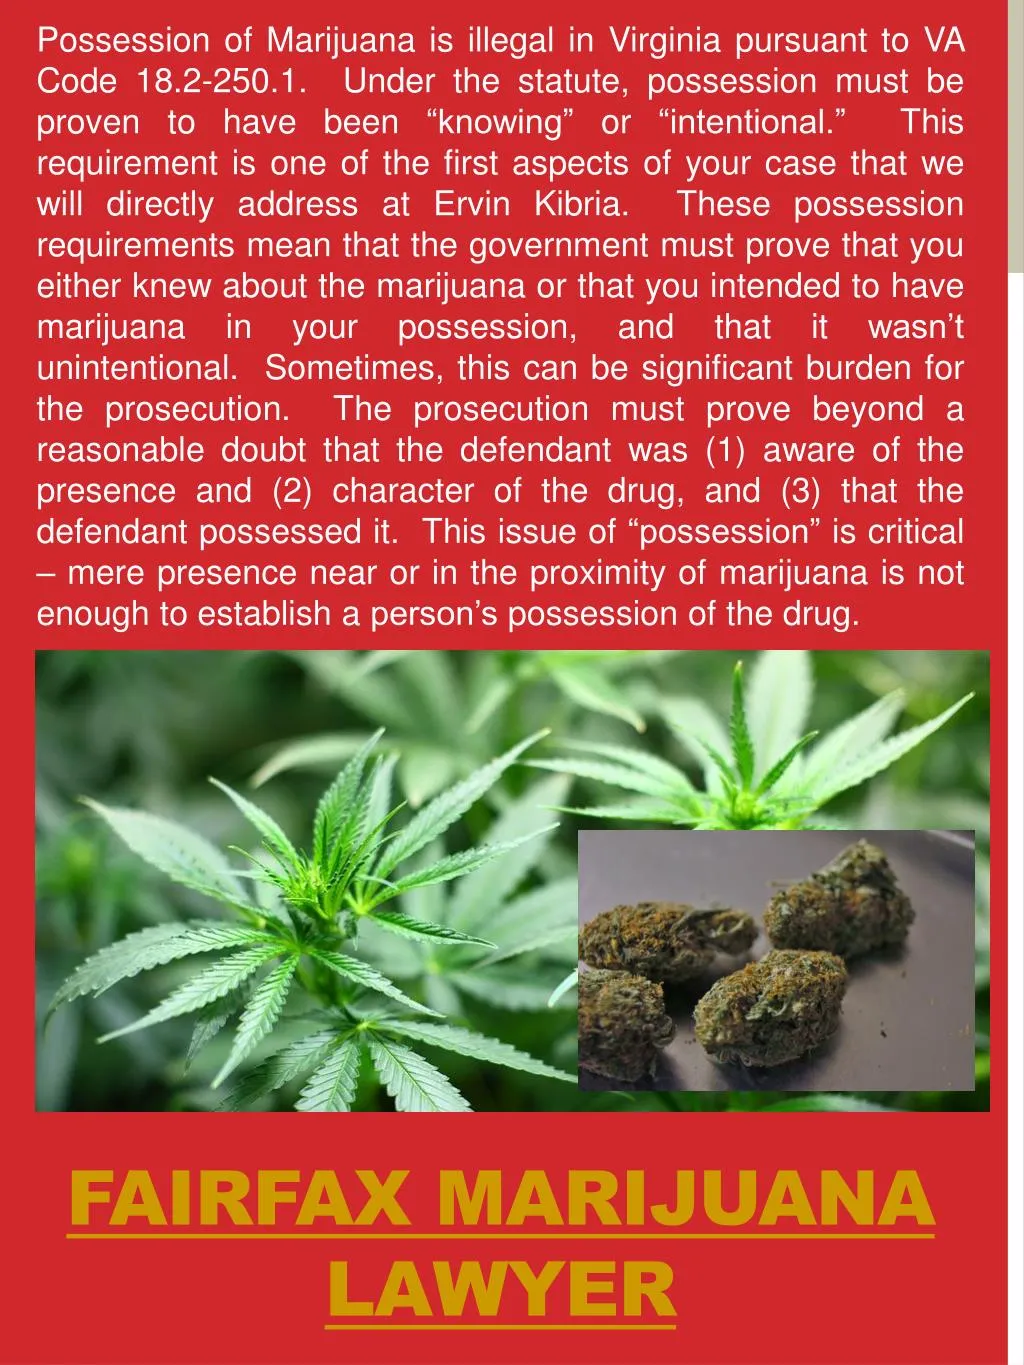 fairfax marijuana lawyer